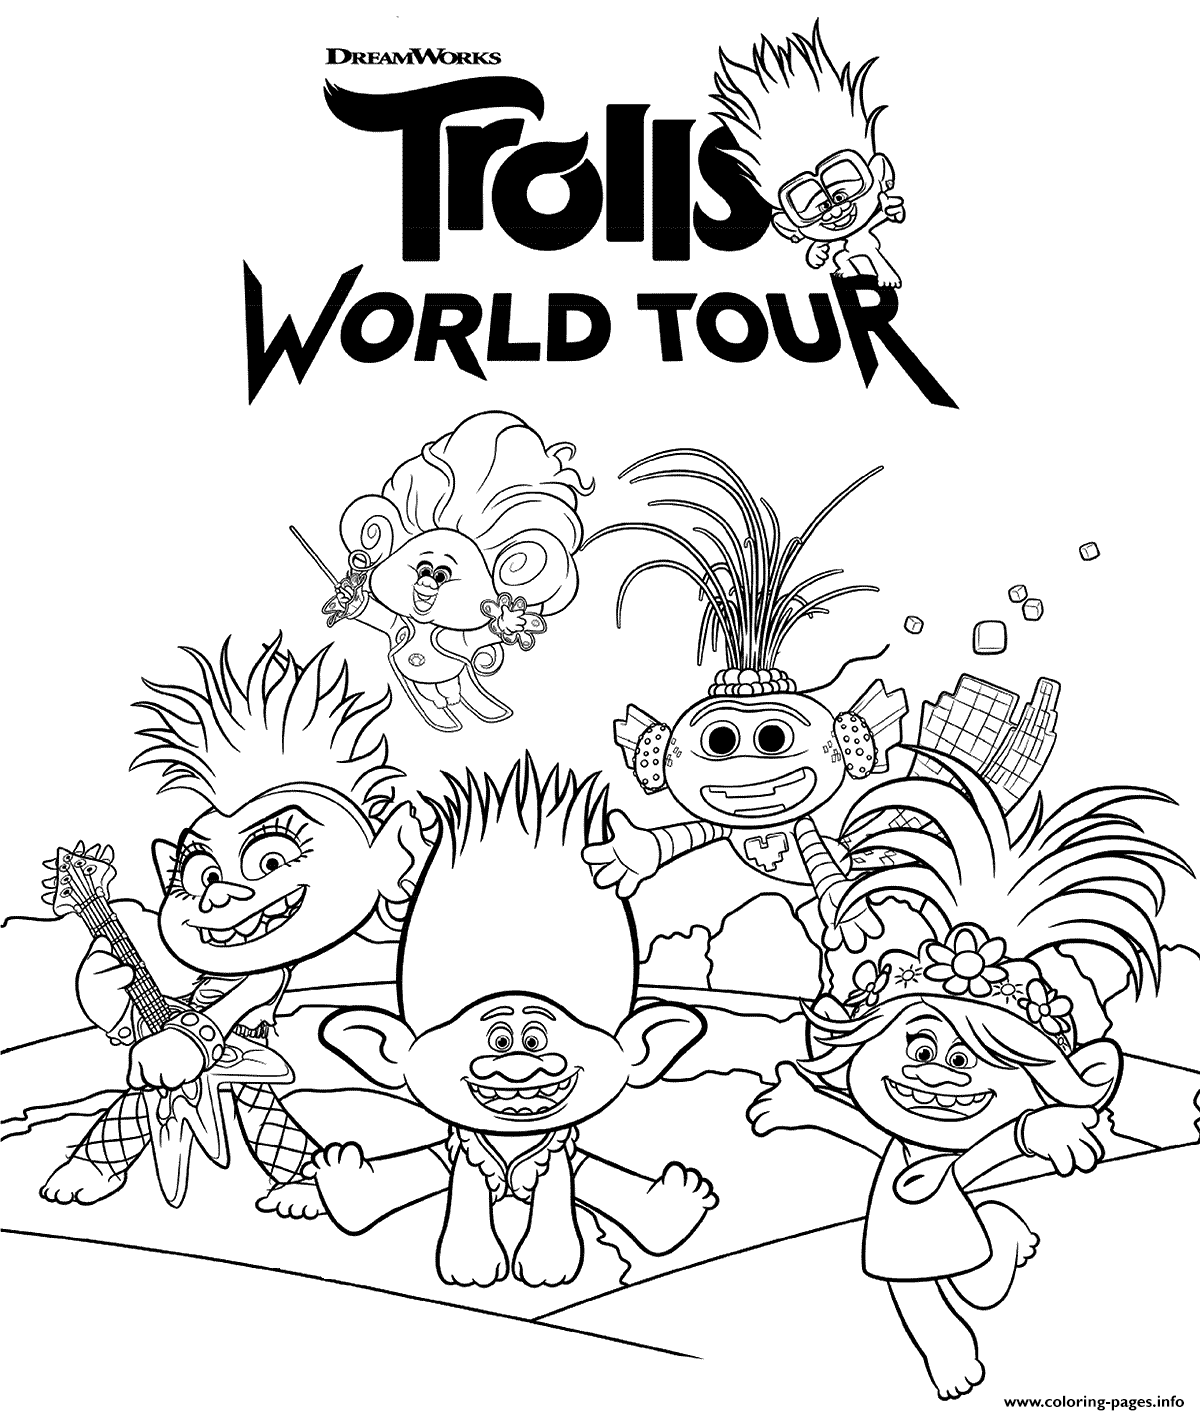 DreamWorks Trolls 2 World Tour  coloring